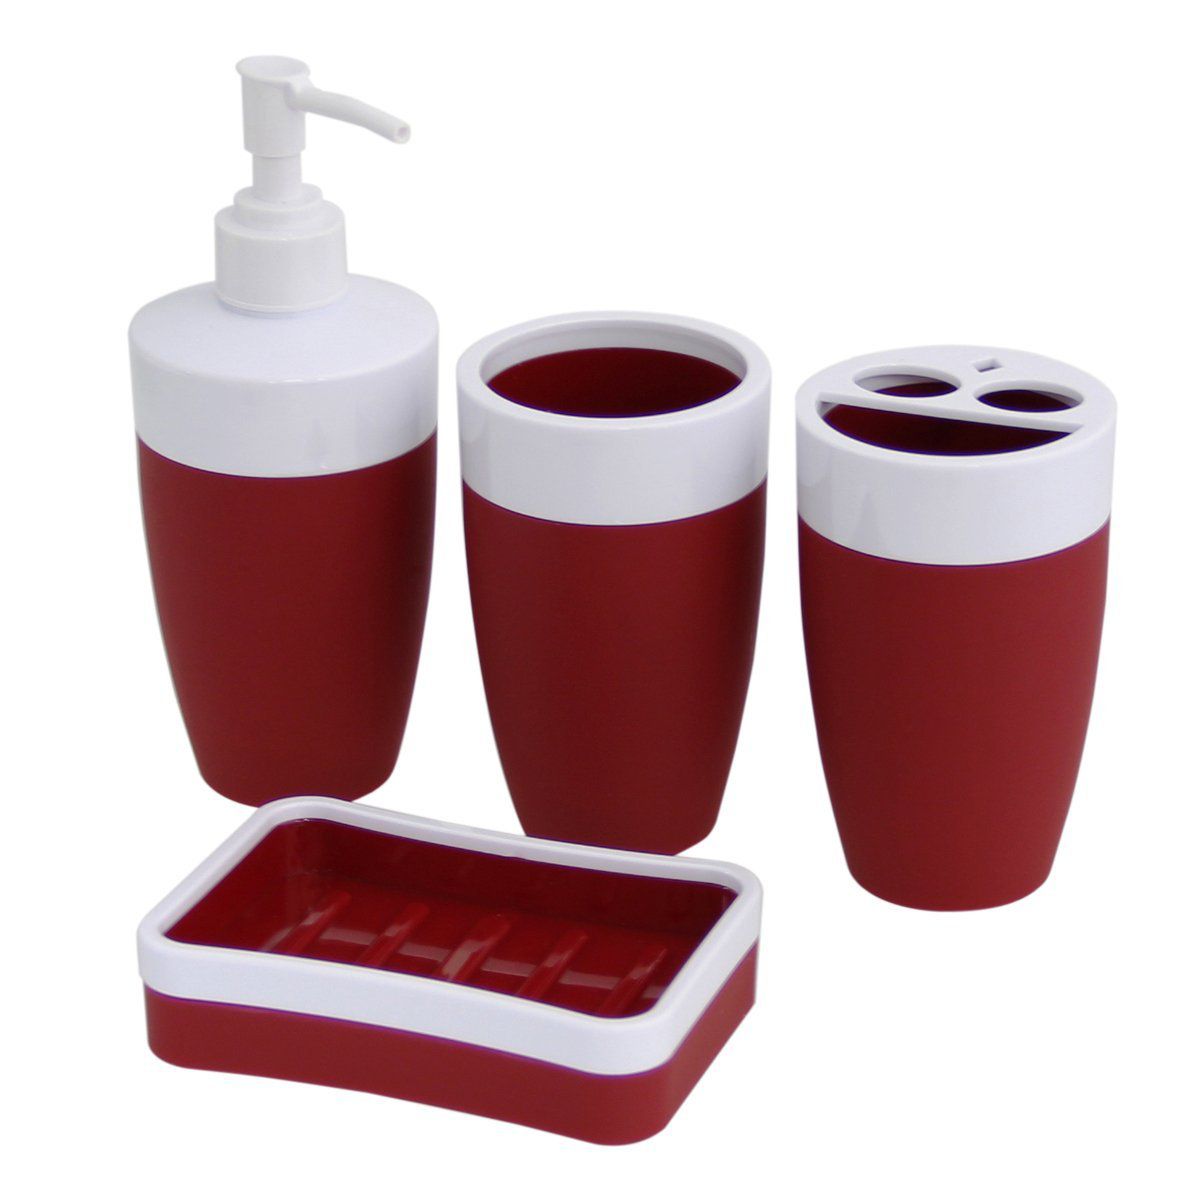 Red bathroom accessories set